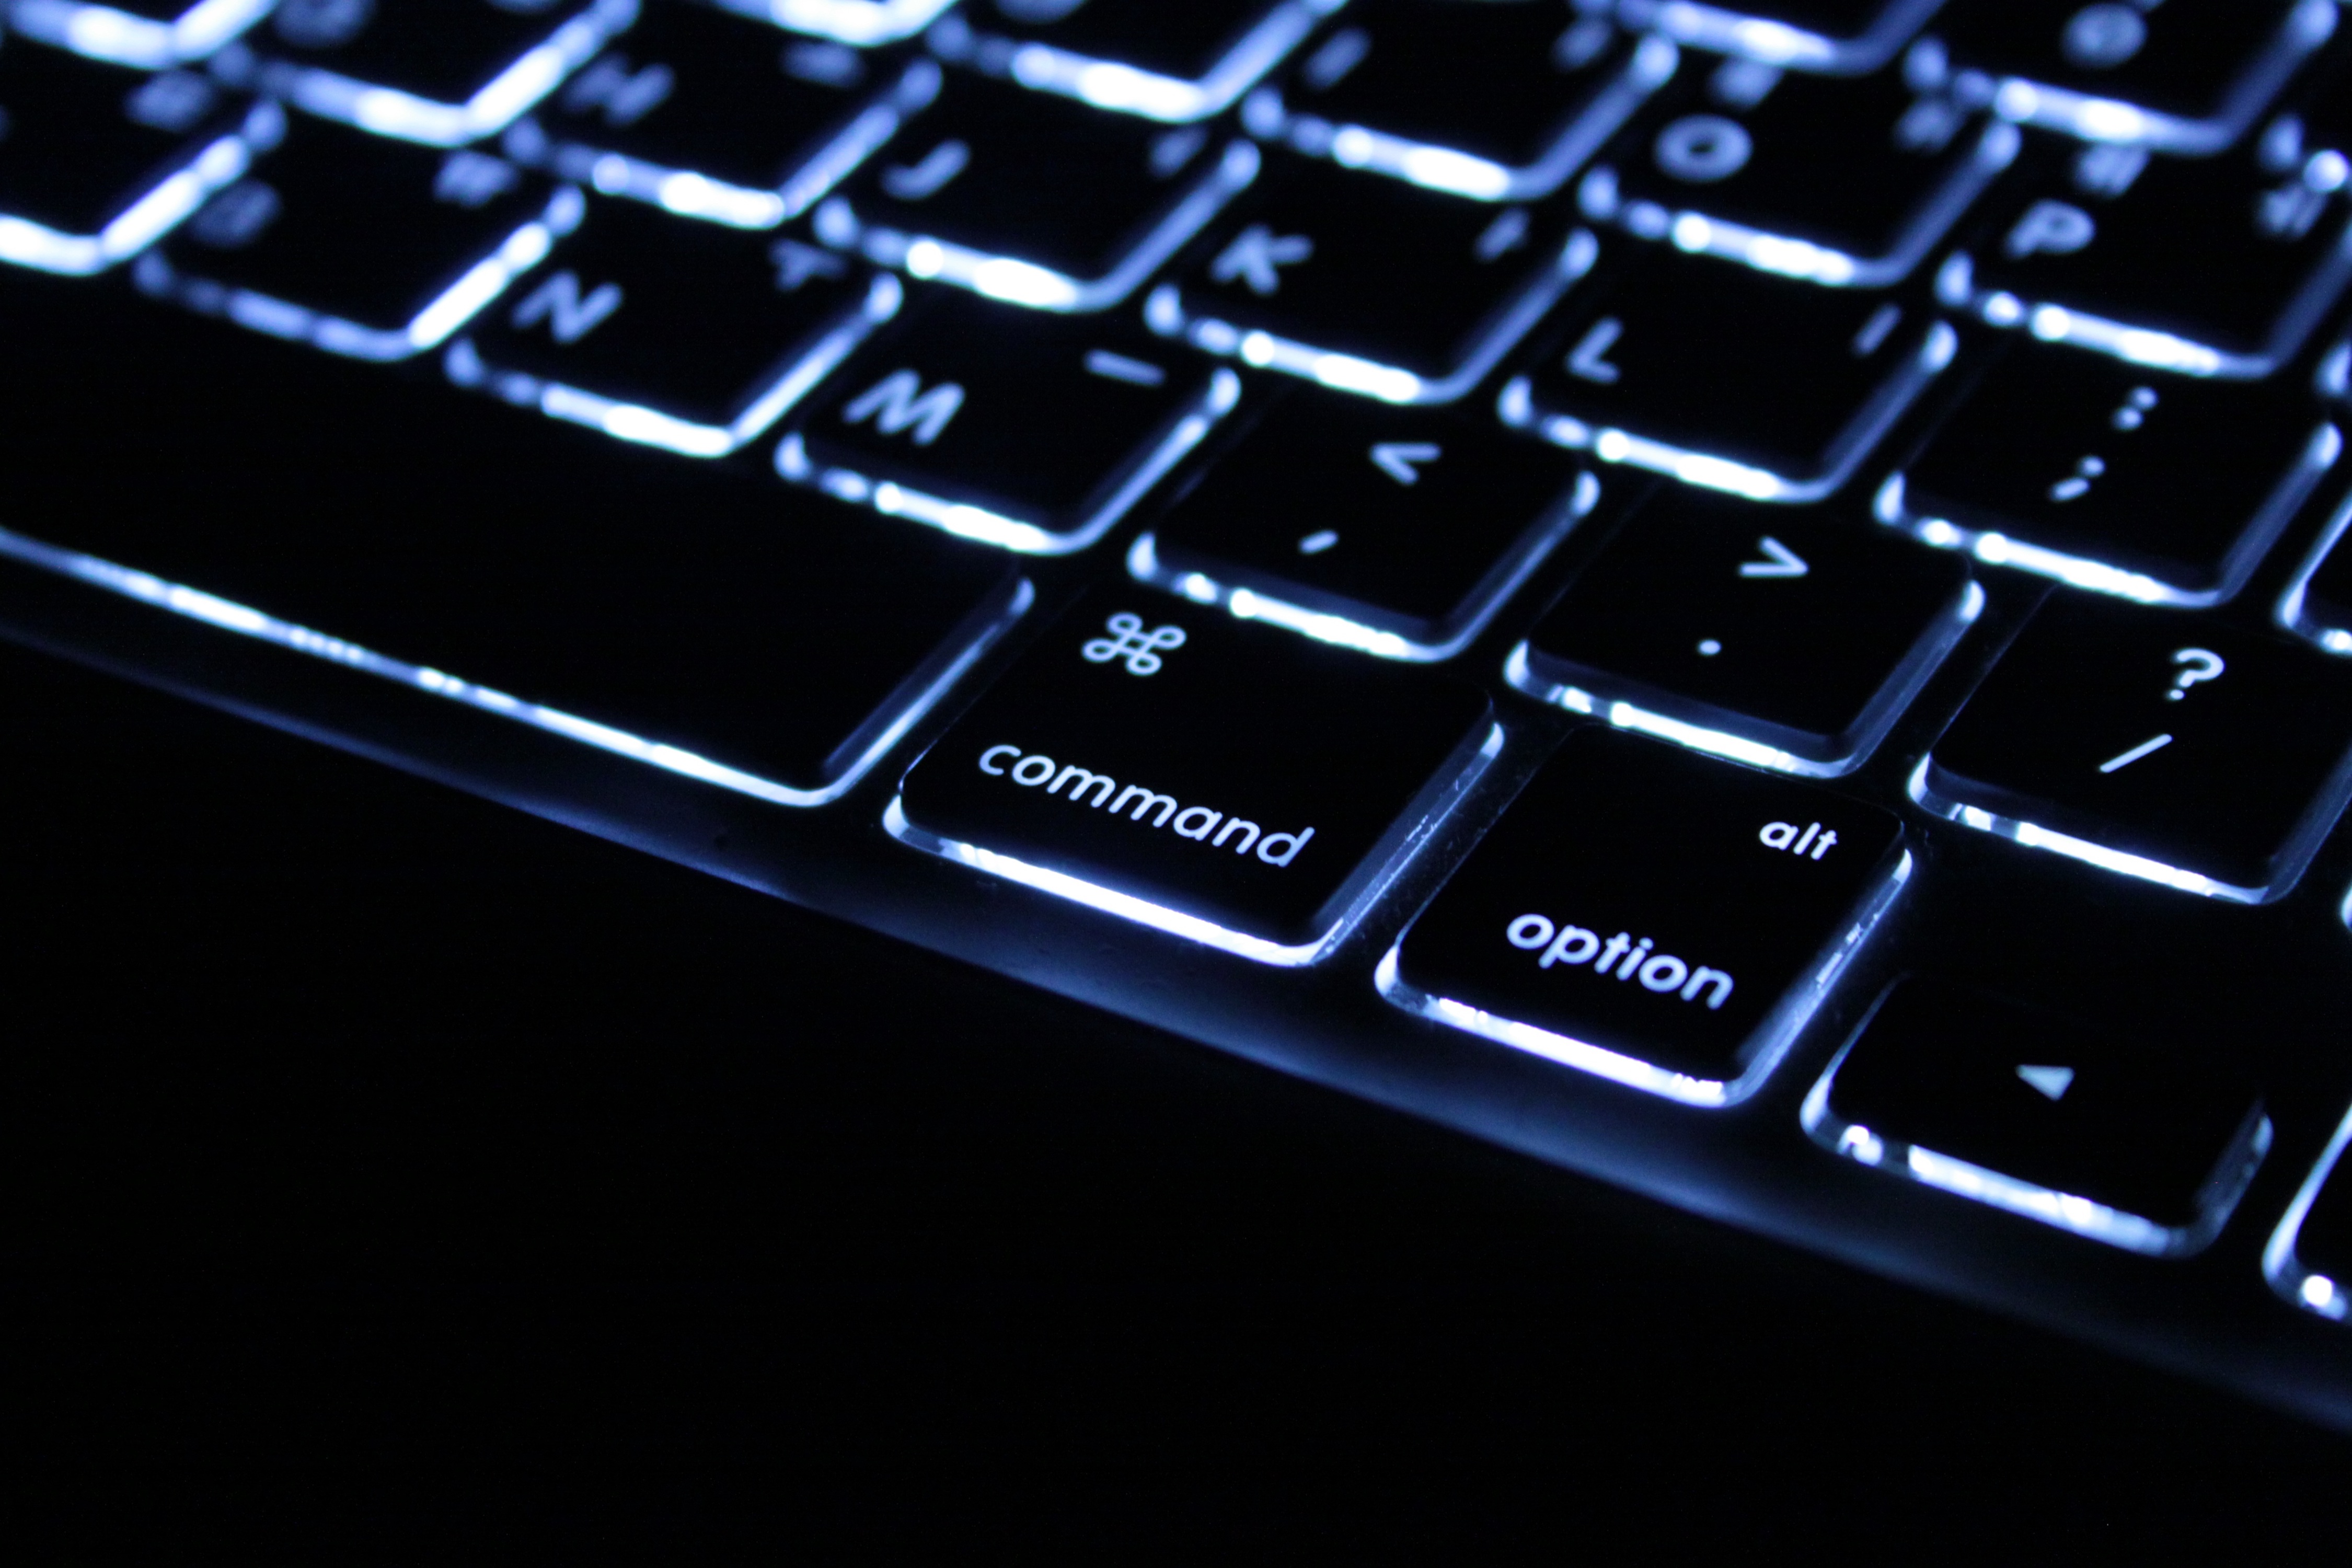 A closeup shot of a keyboard